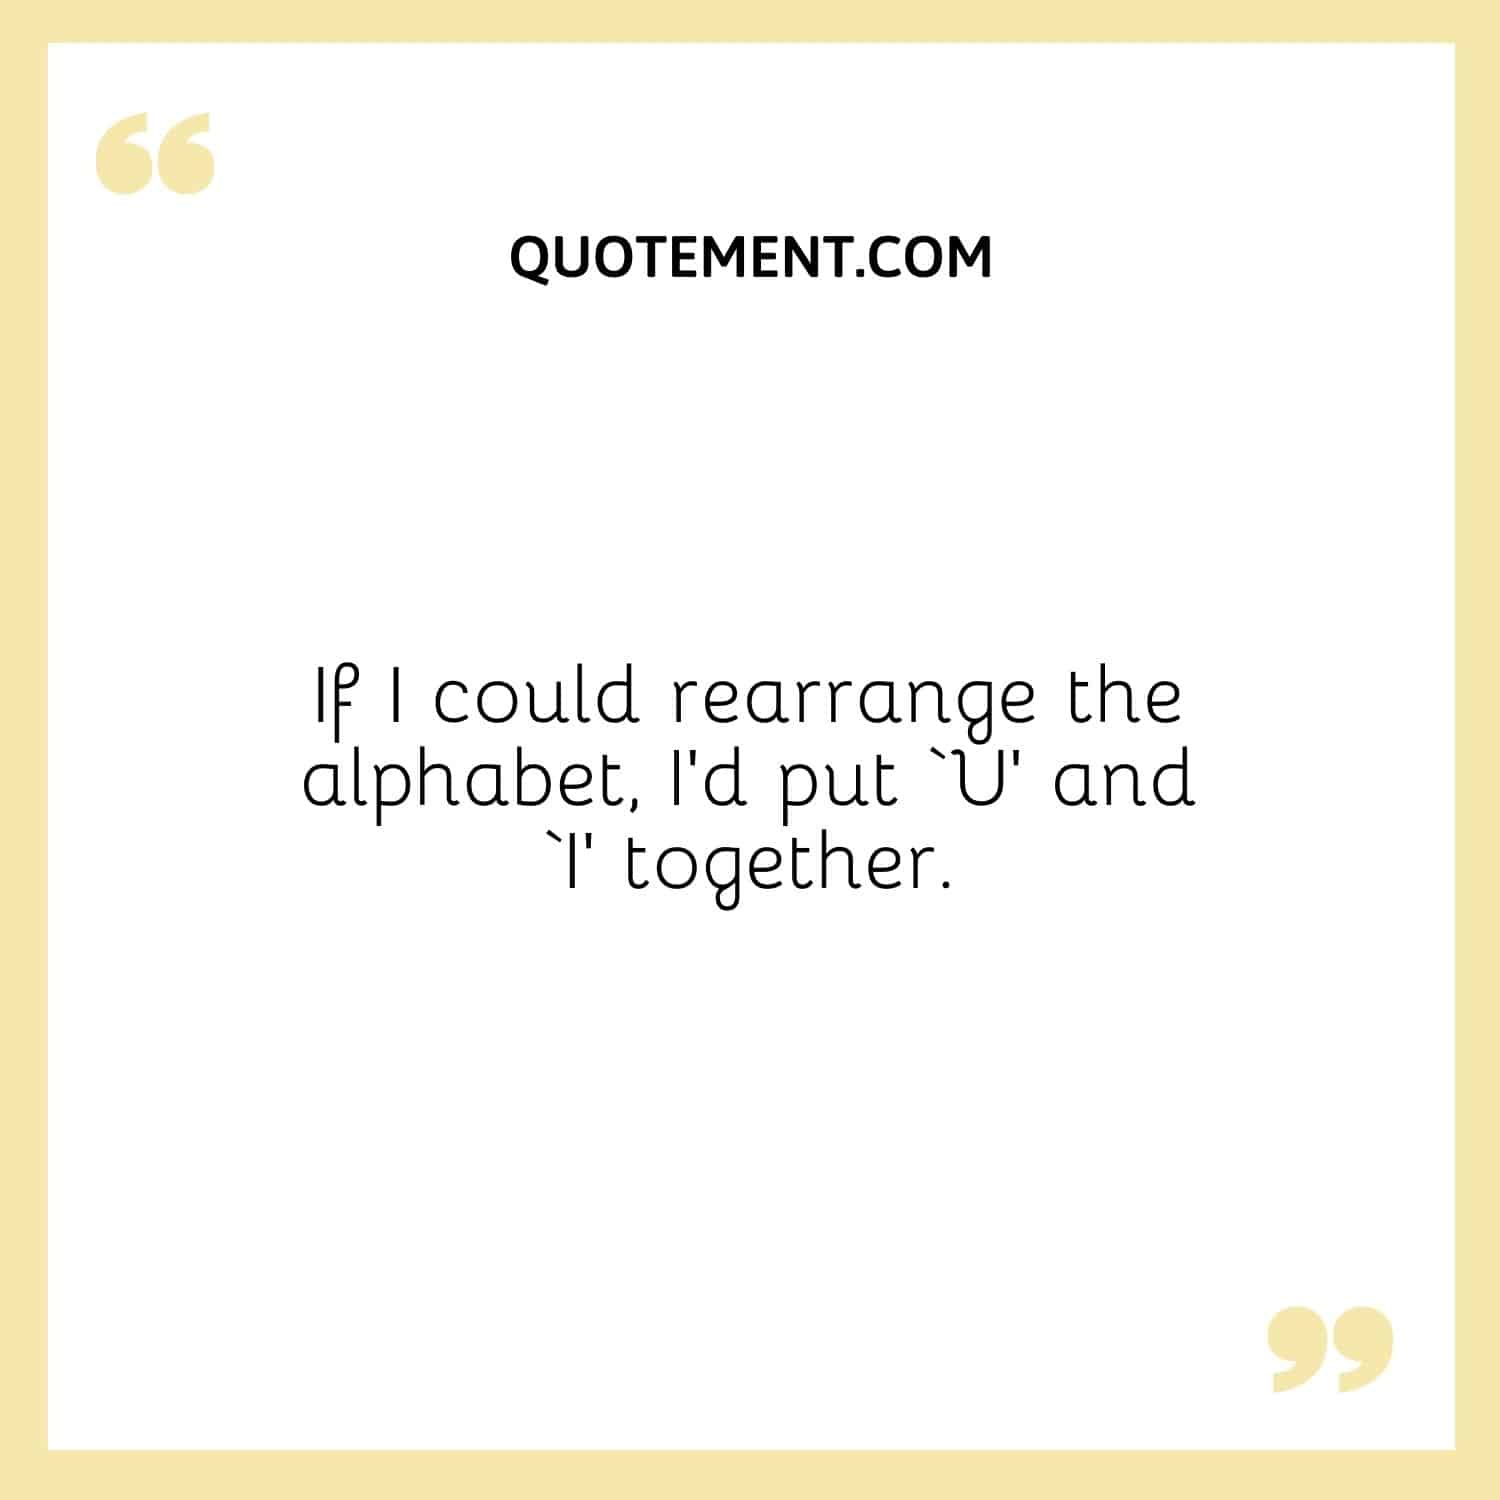 If I could rearrange the alphabet, I’d put ‘U’ and ‘I’ together.